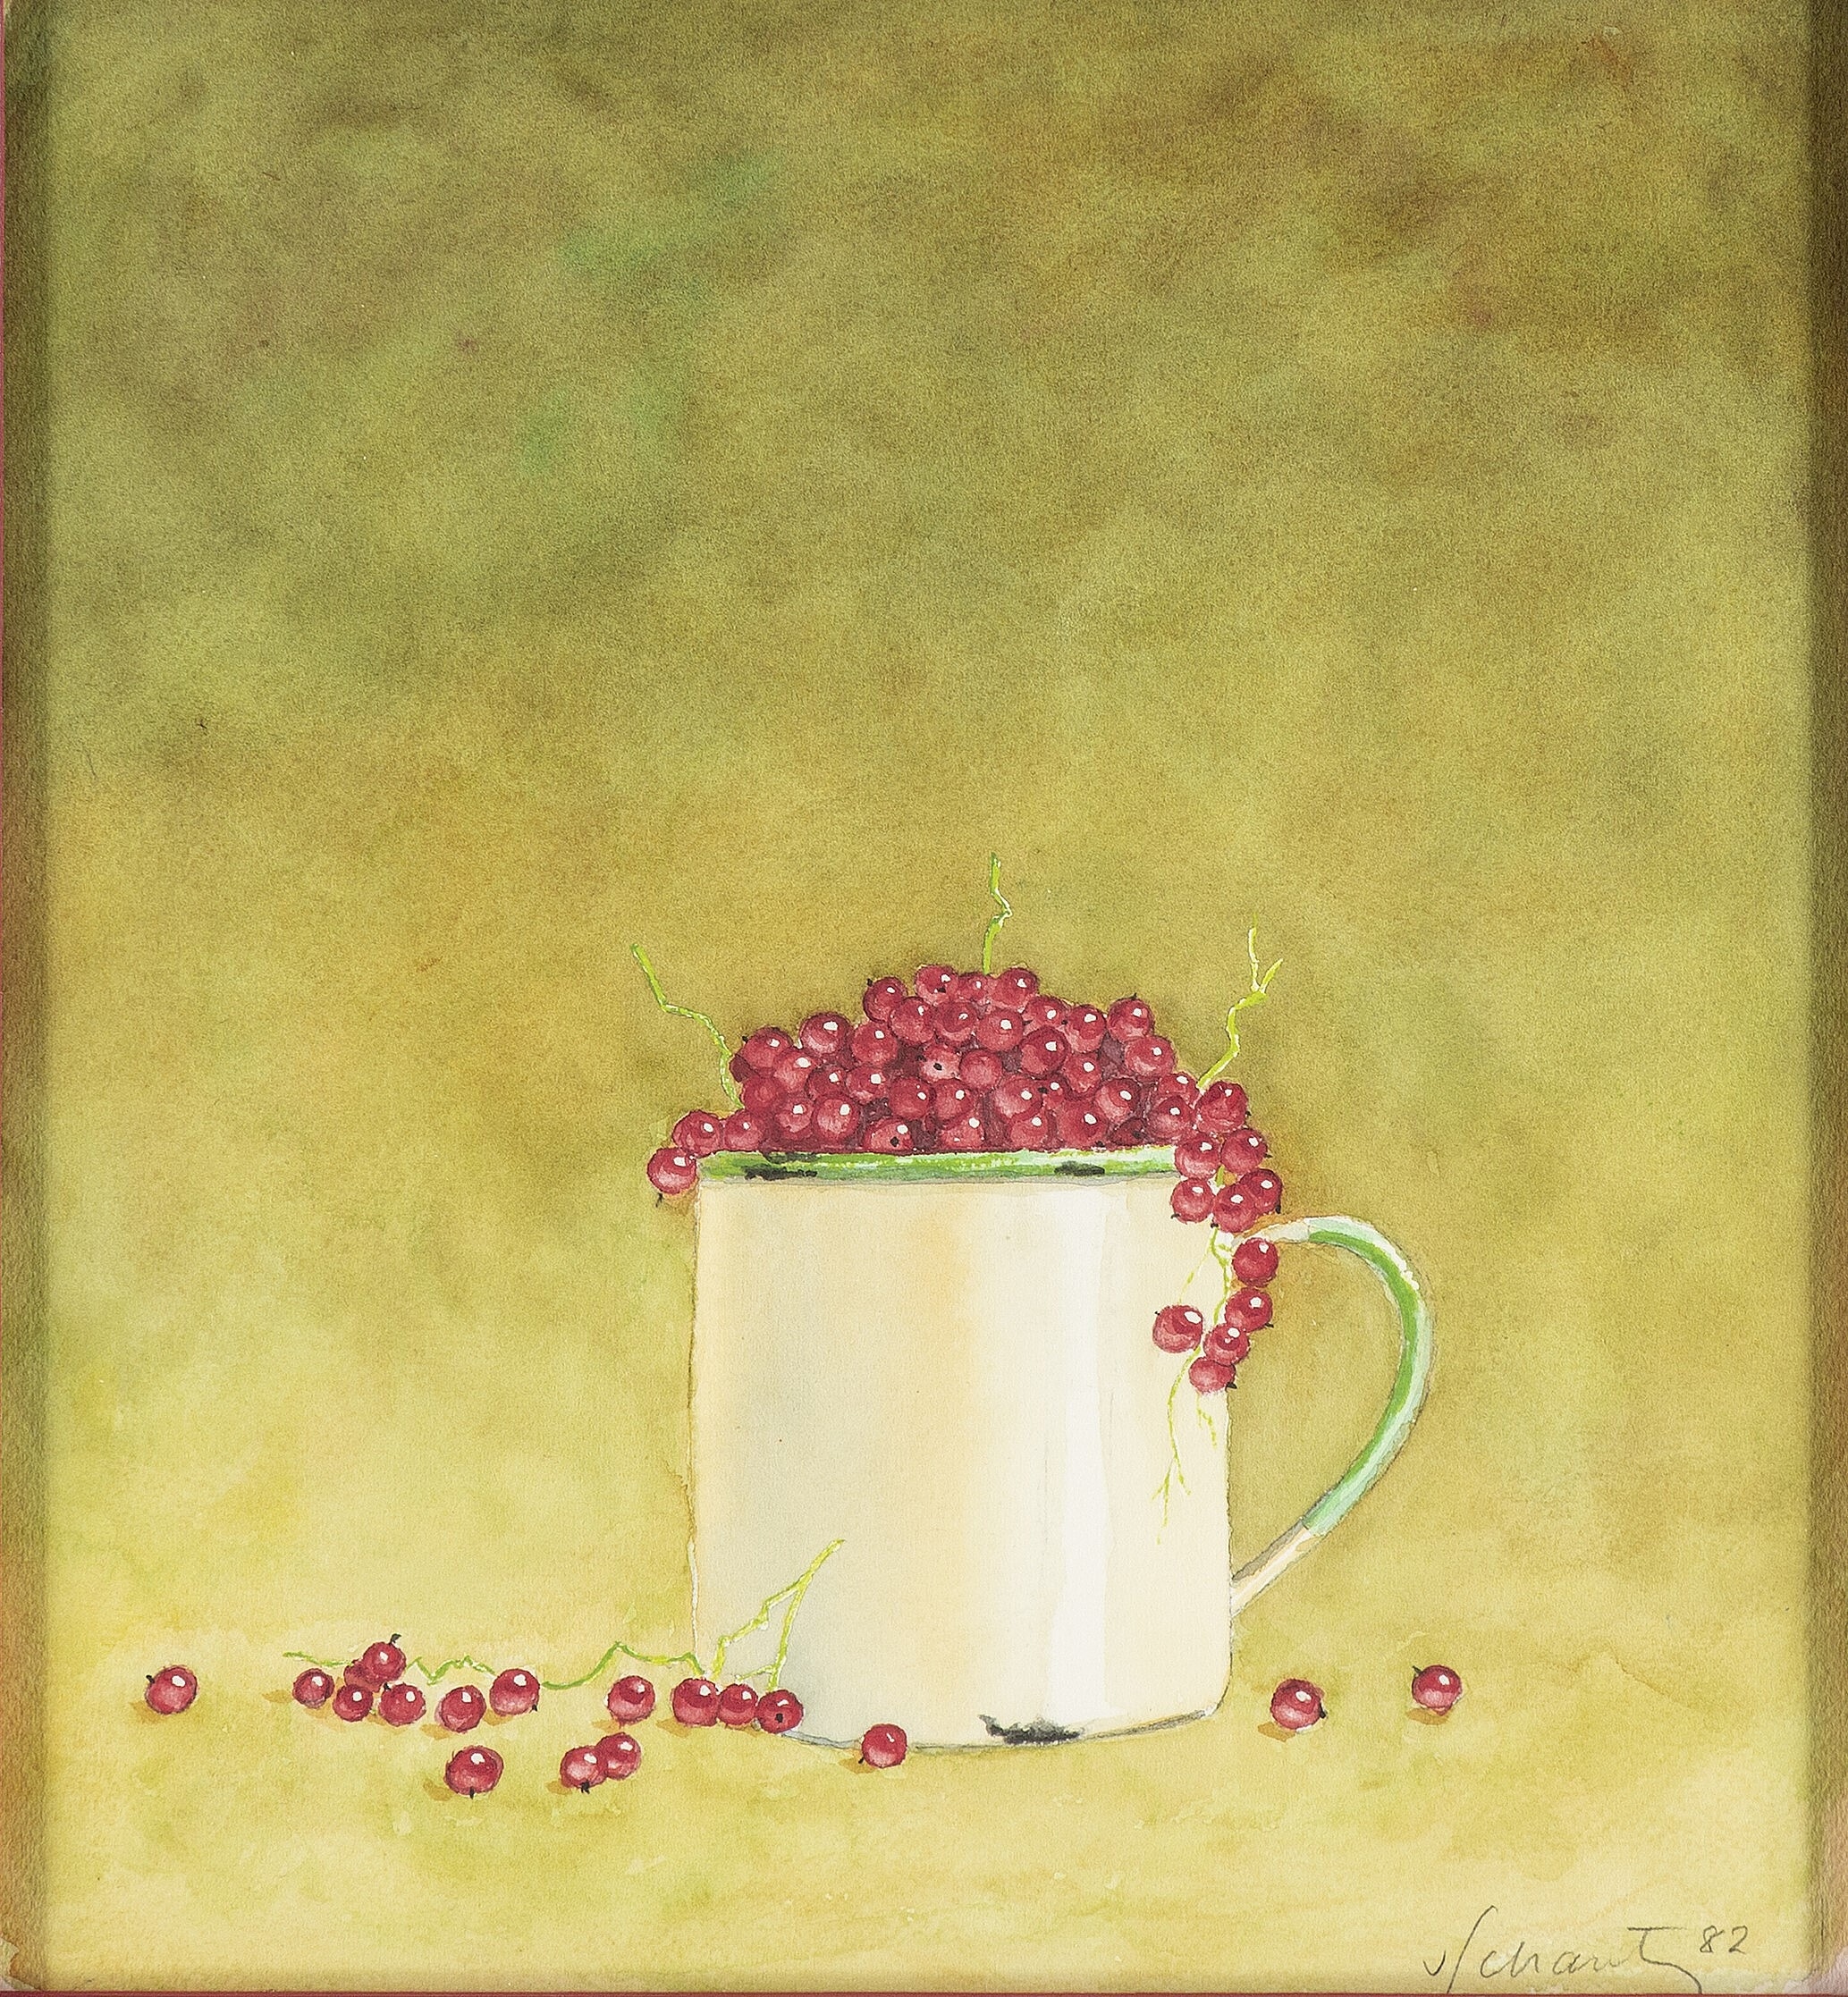 Still life with with red currants in a mug by Philip von Schantz, 1982